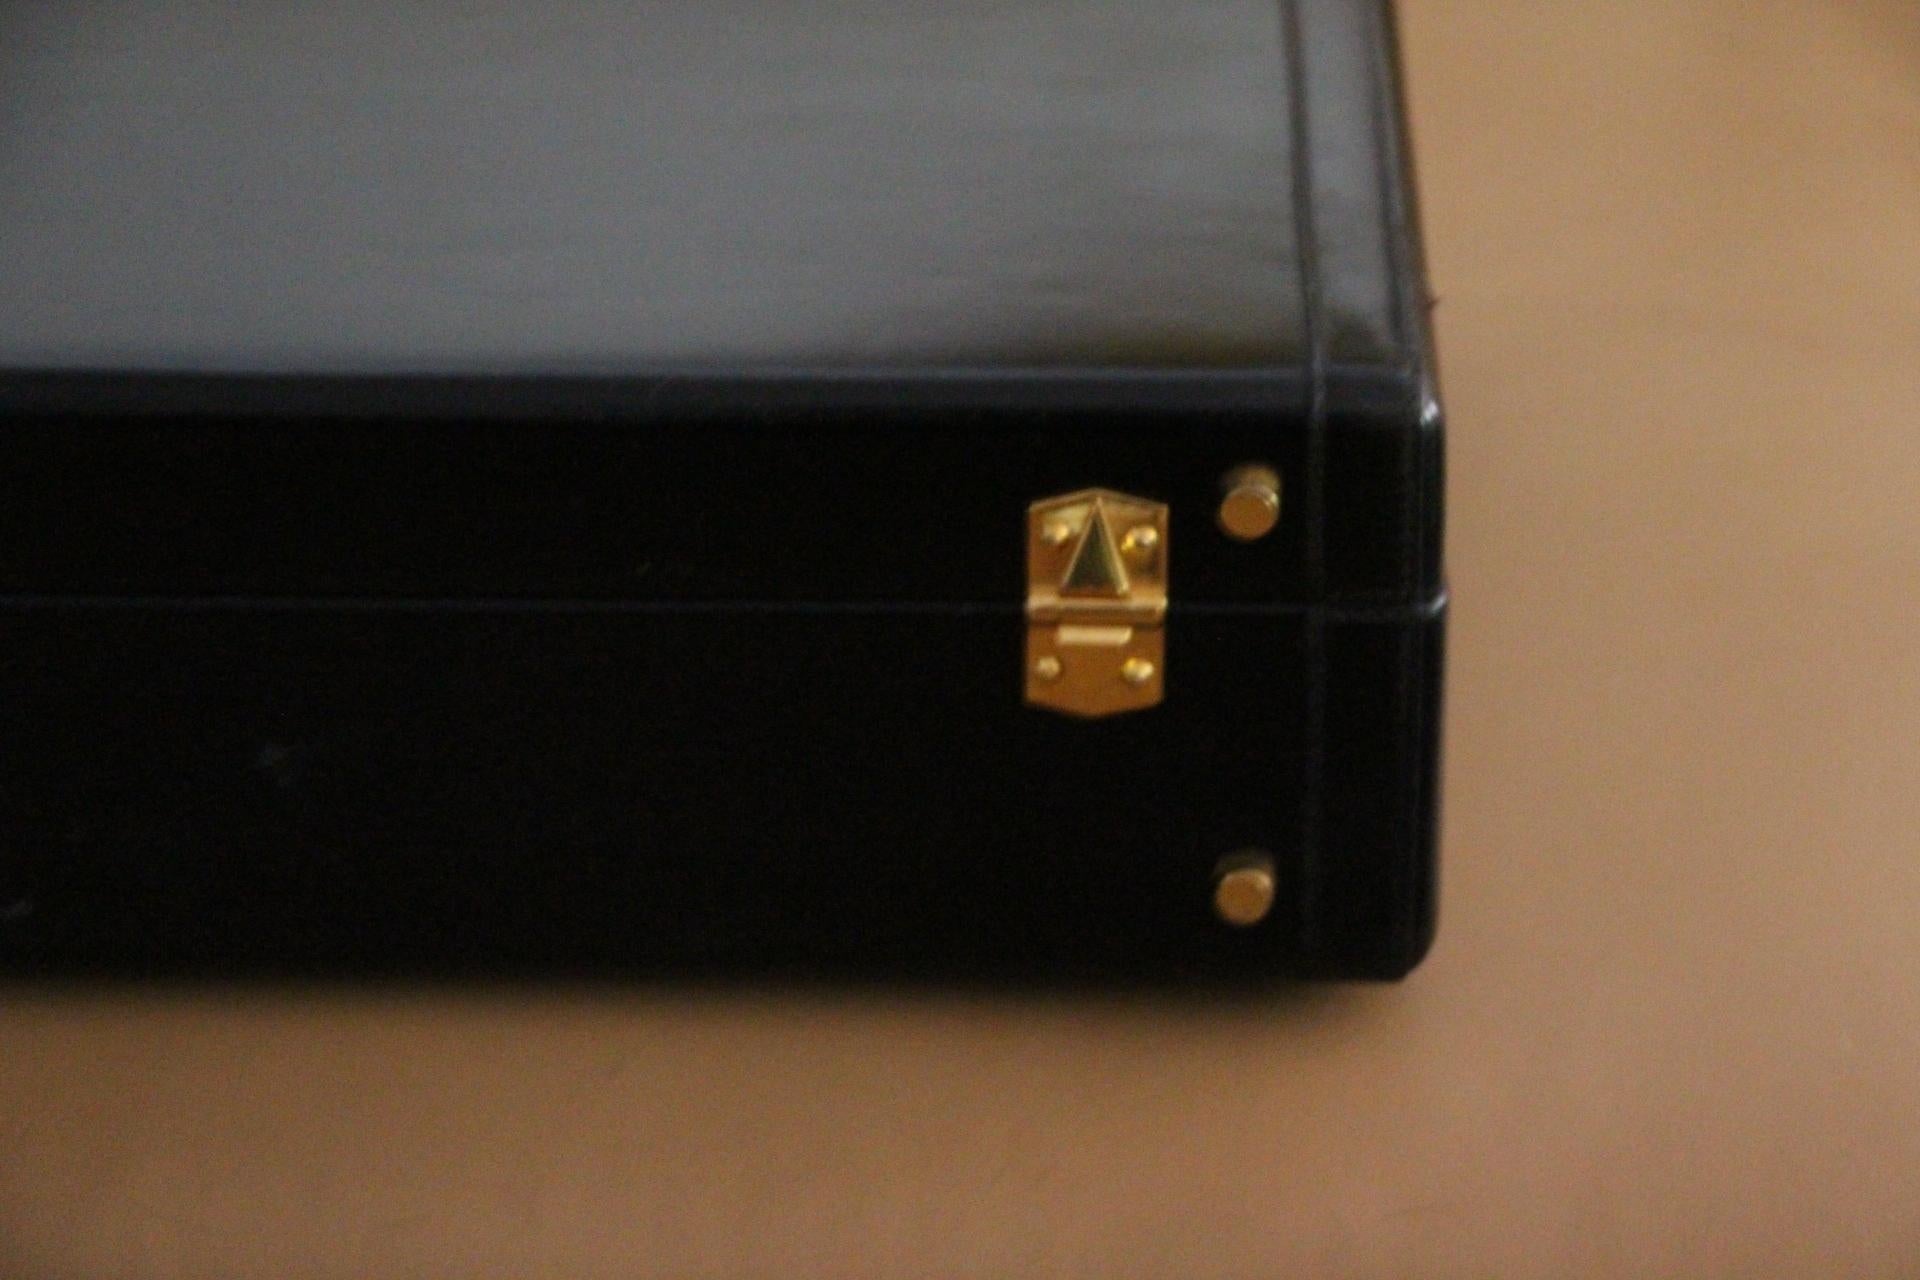 Hermès Black Leather Briefcase, Hermes Attache, Hermes Bag 4